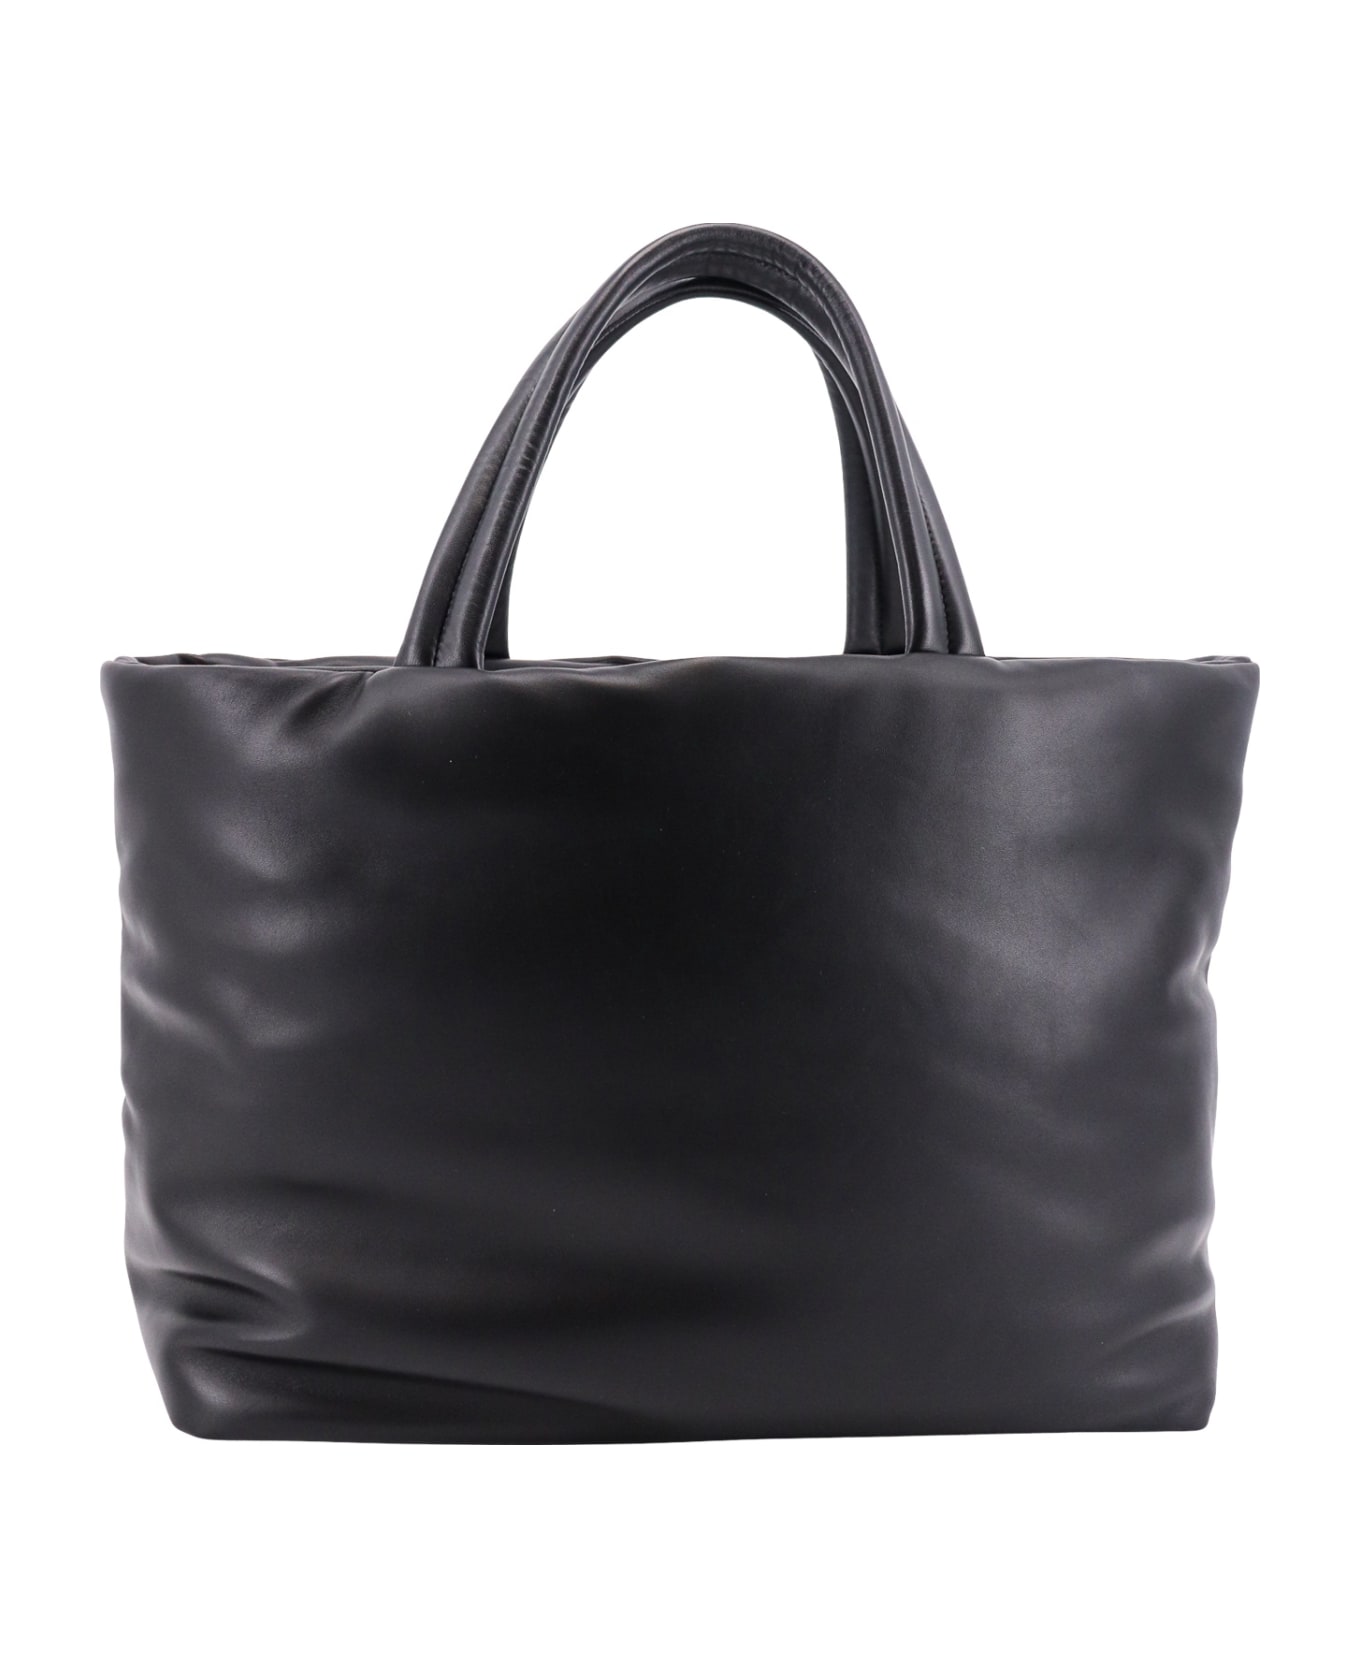 Saint Laurent Tote Bag With Logo - Black